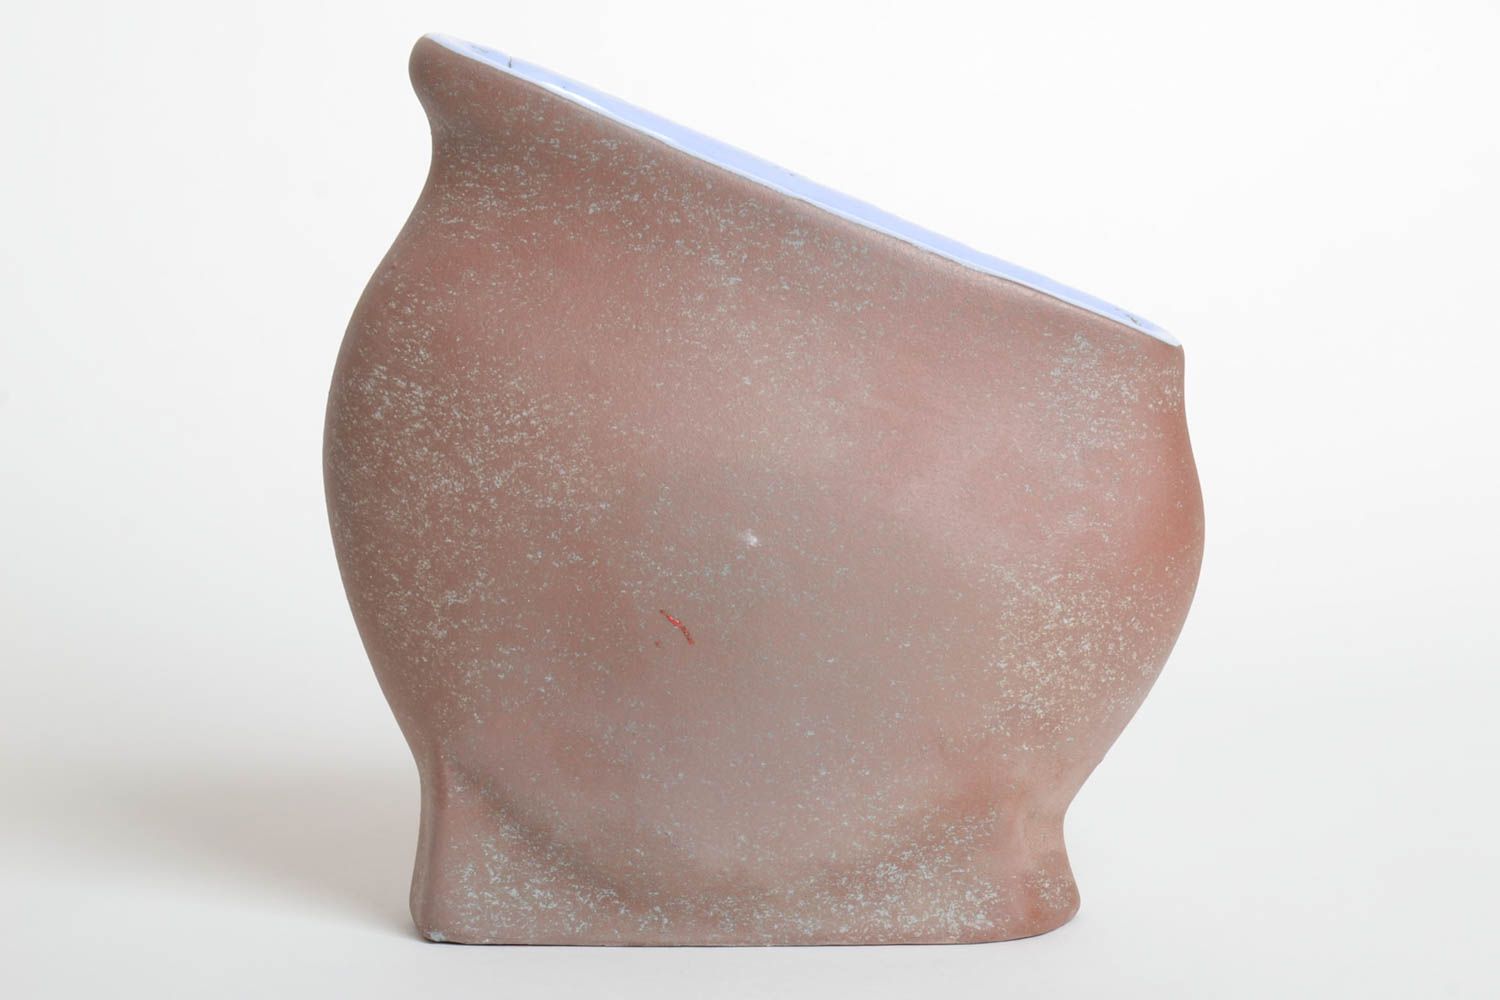 Handmade Keramik Vase Haus Deko hohe ausgefallene Vase mit bunter Bemalung foto 4